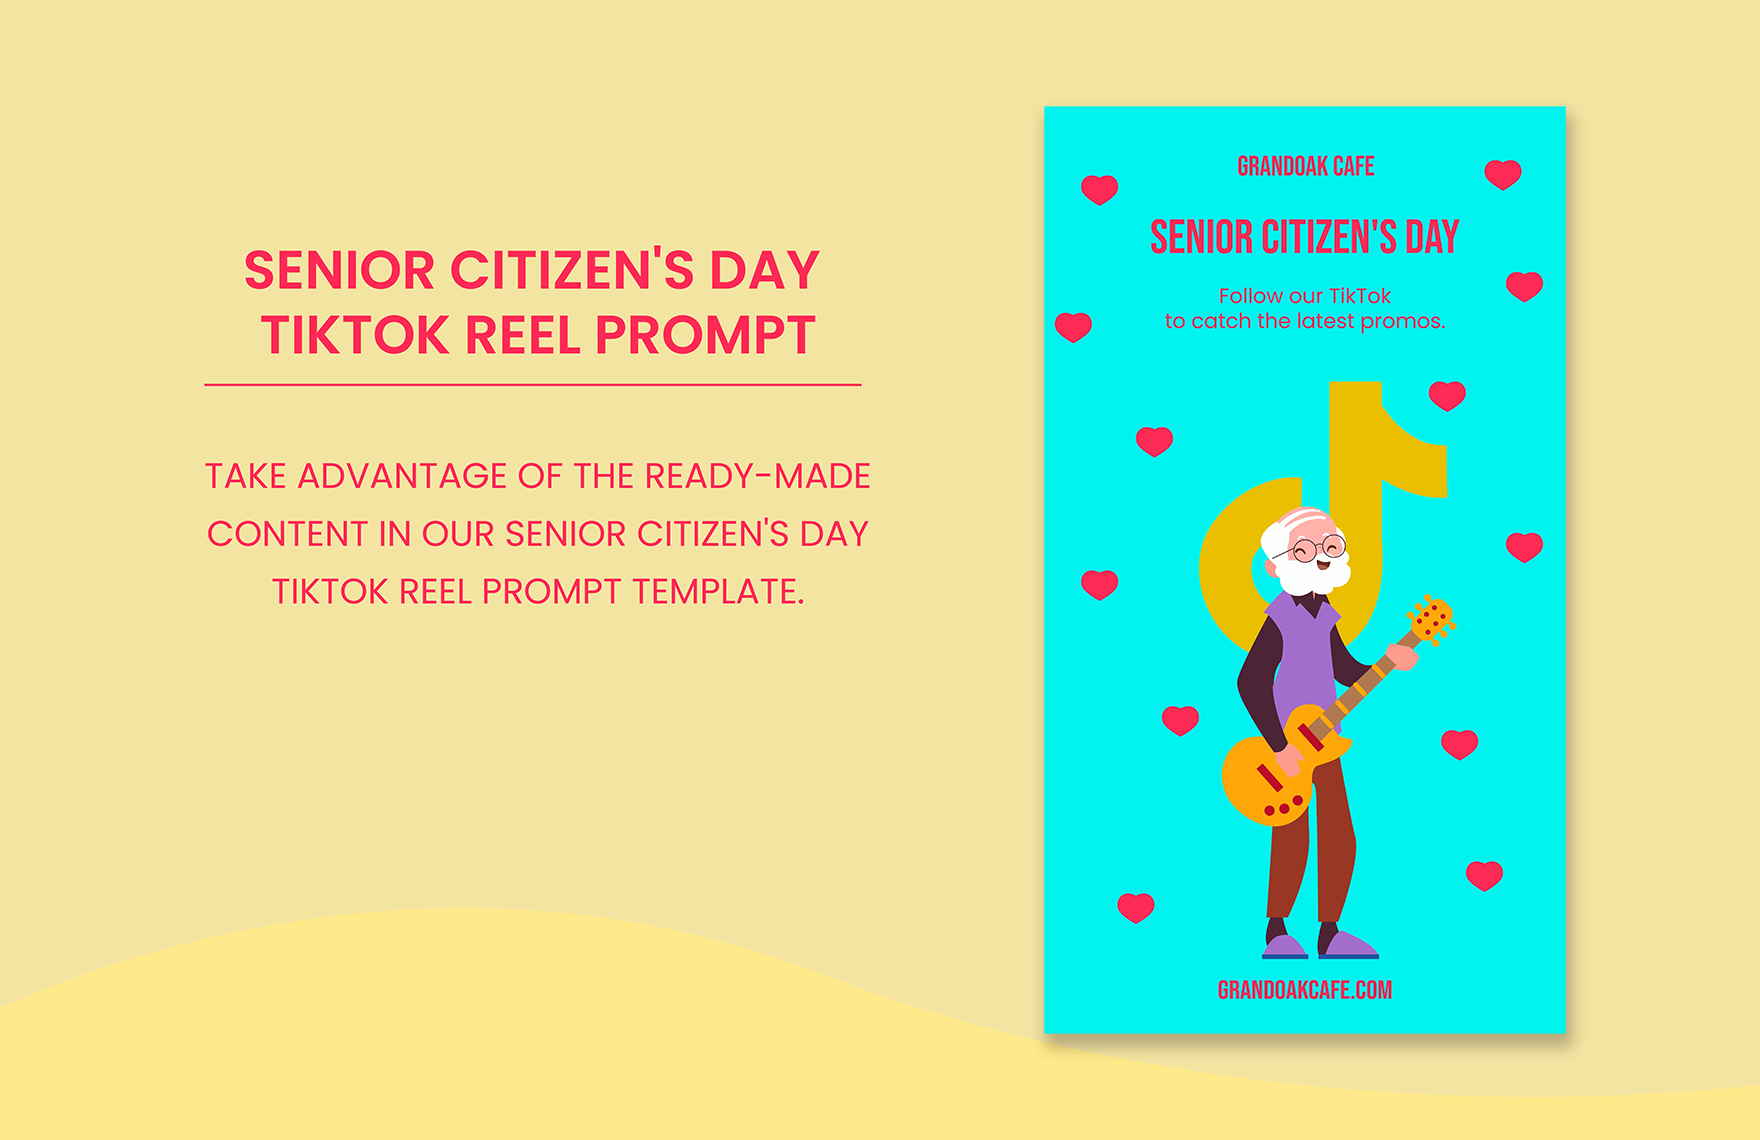 Senior Citizen's Day Tiktok Reel Prompt Template